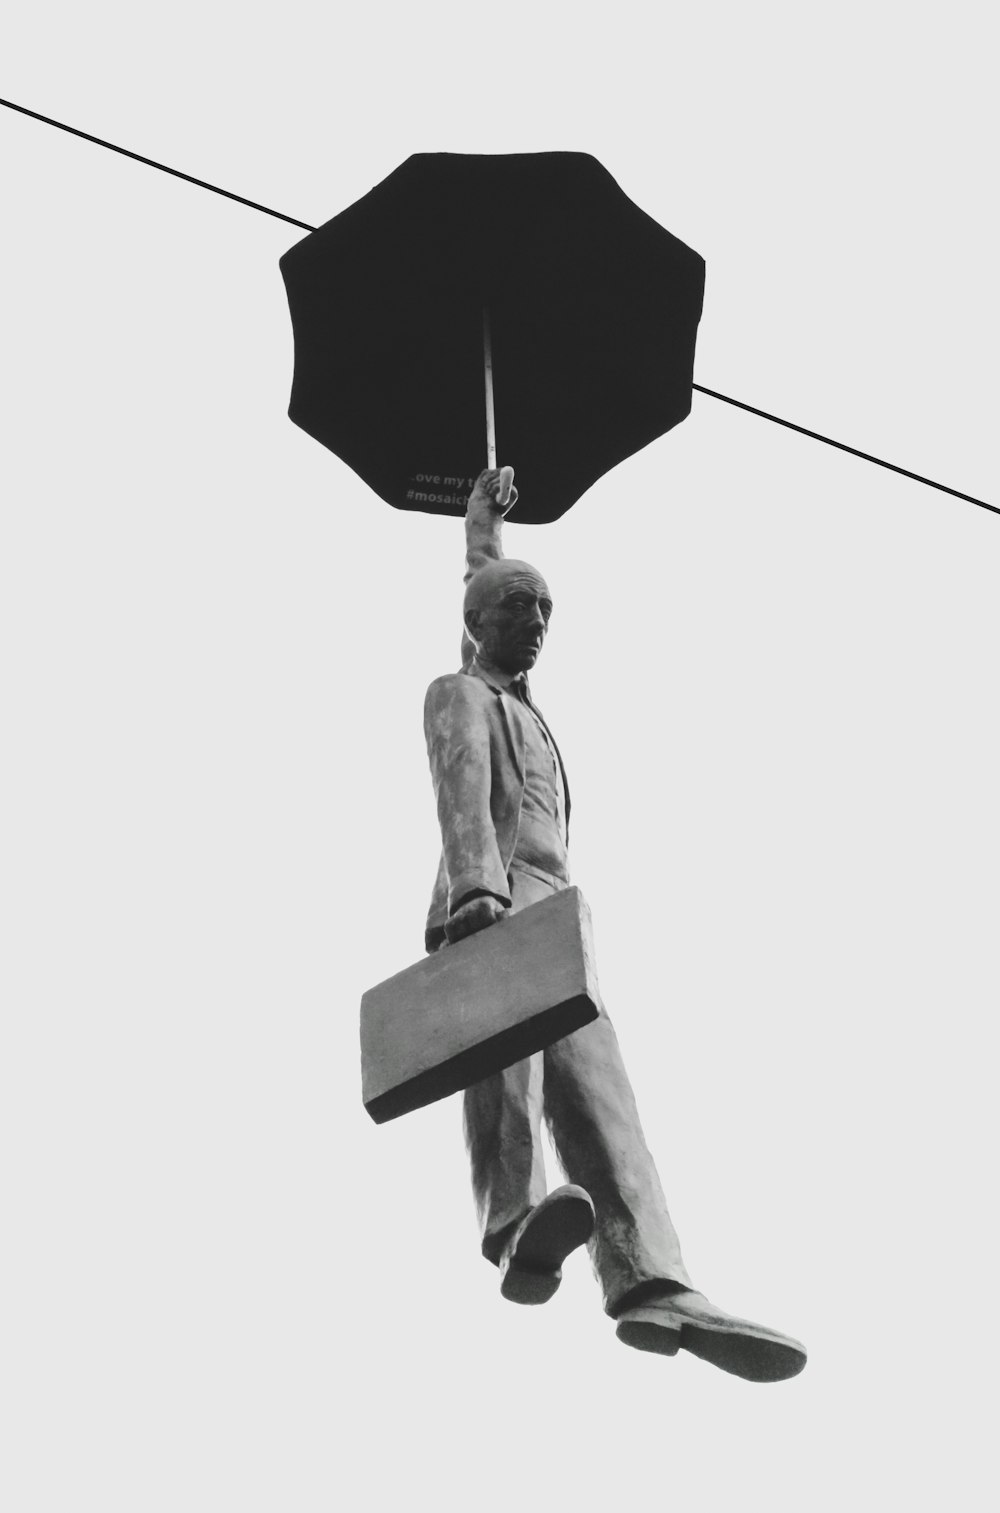 floating man holding umbrella statue